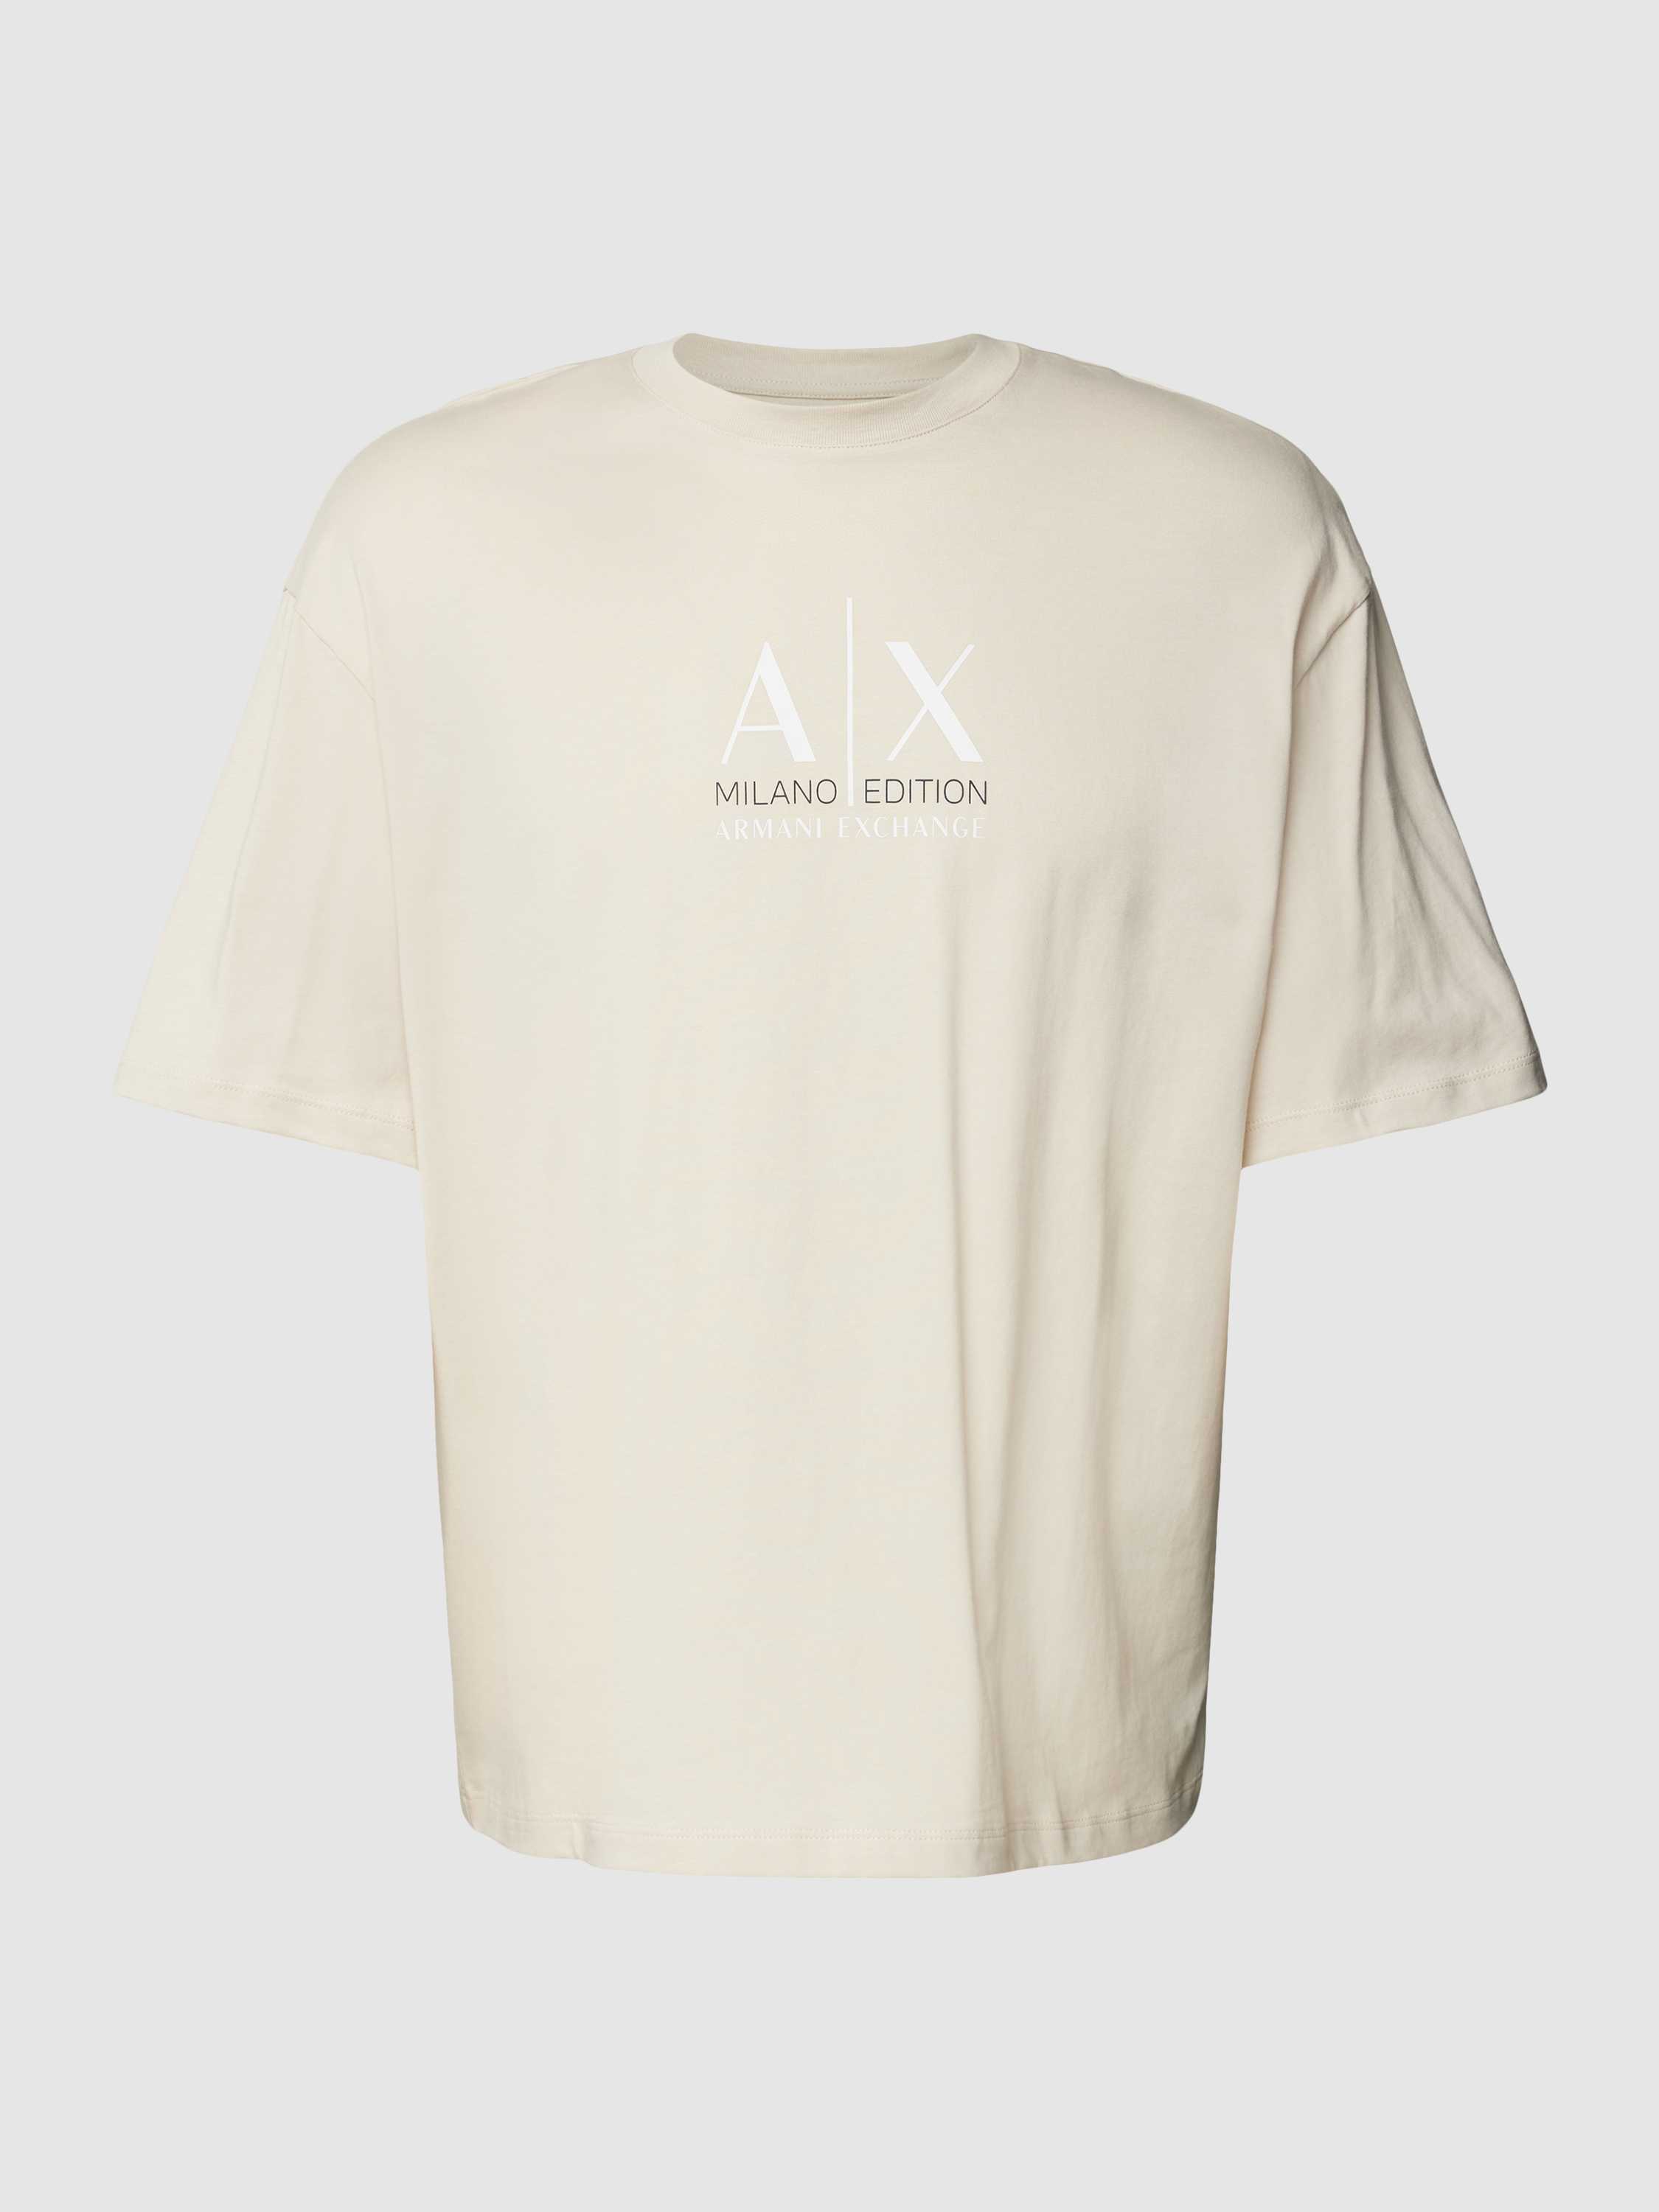 Armani Exchange Milano Edition Cotton Sustainable T-Shirt - L